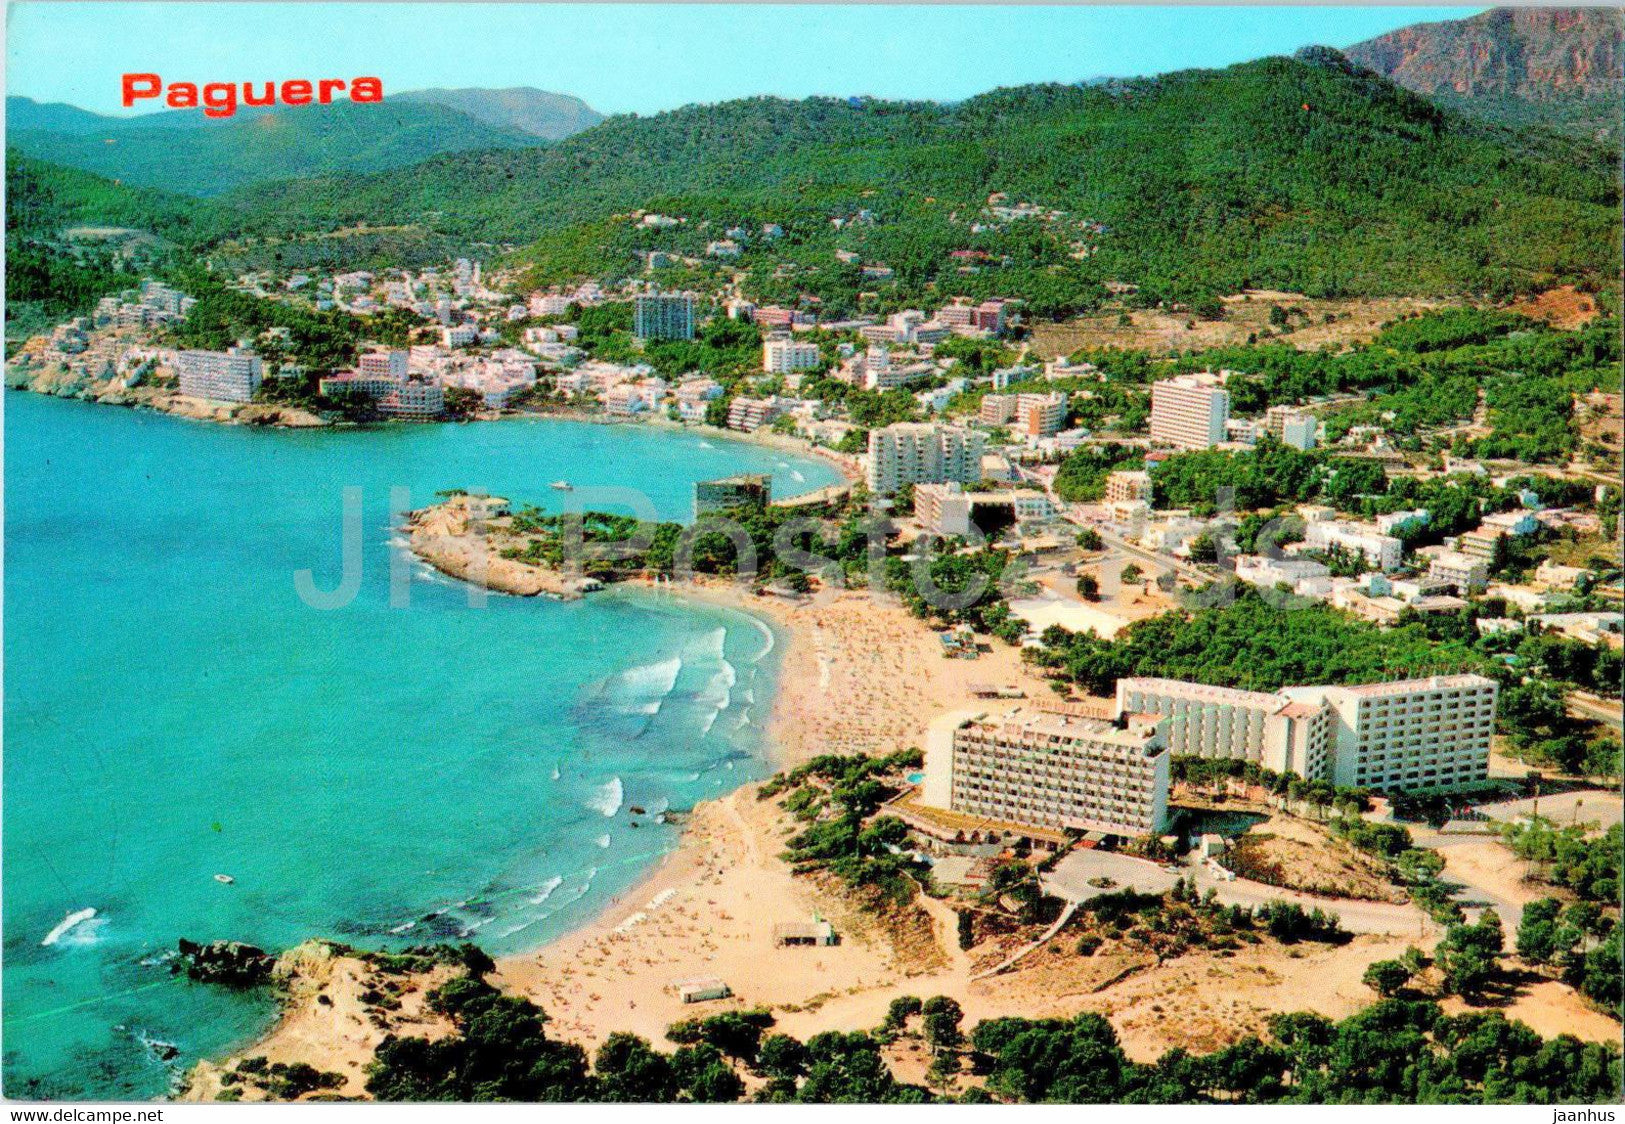 Paguera - Mallorca - 4175 - Spain - unused - JH Postcards